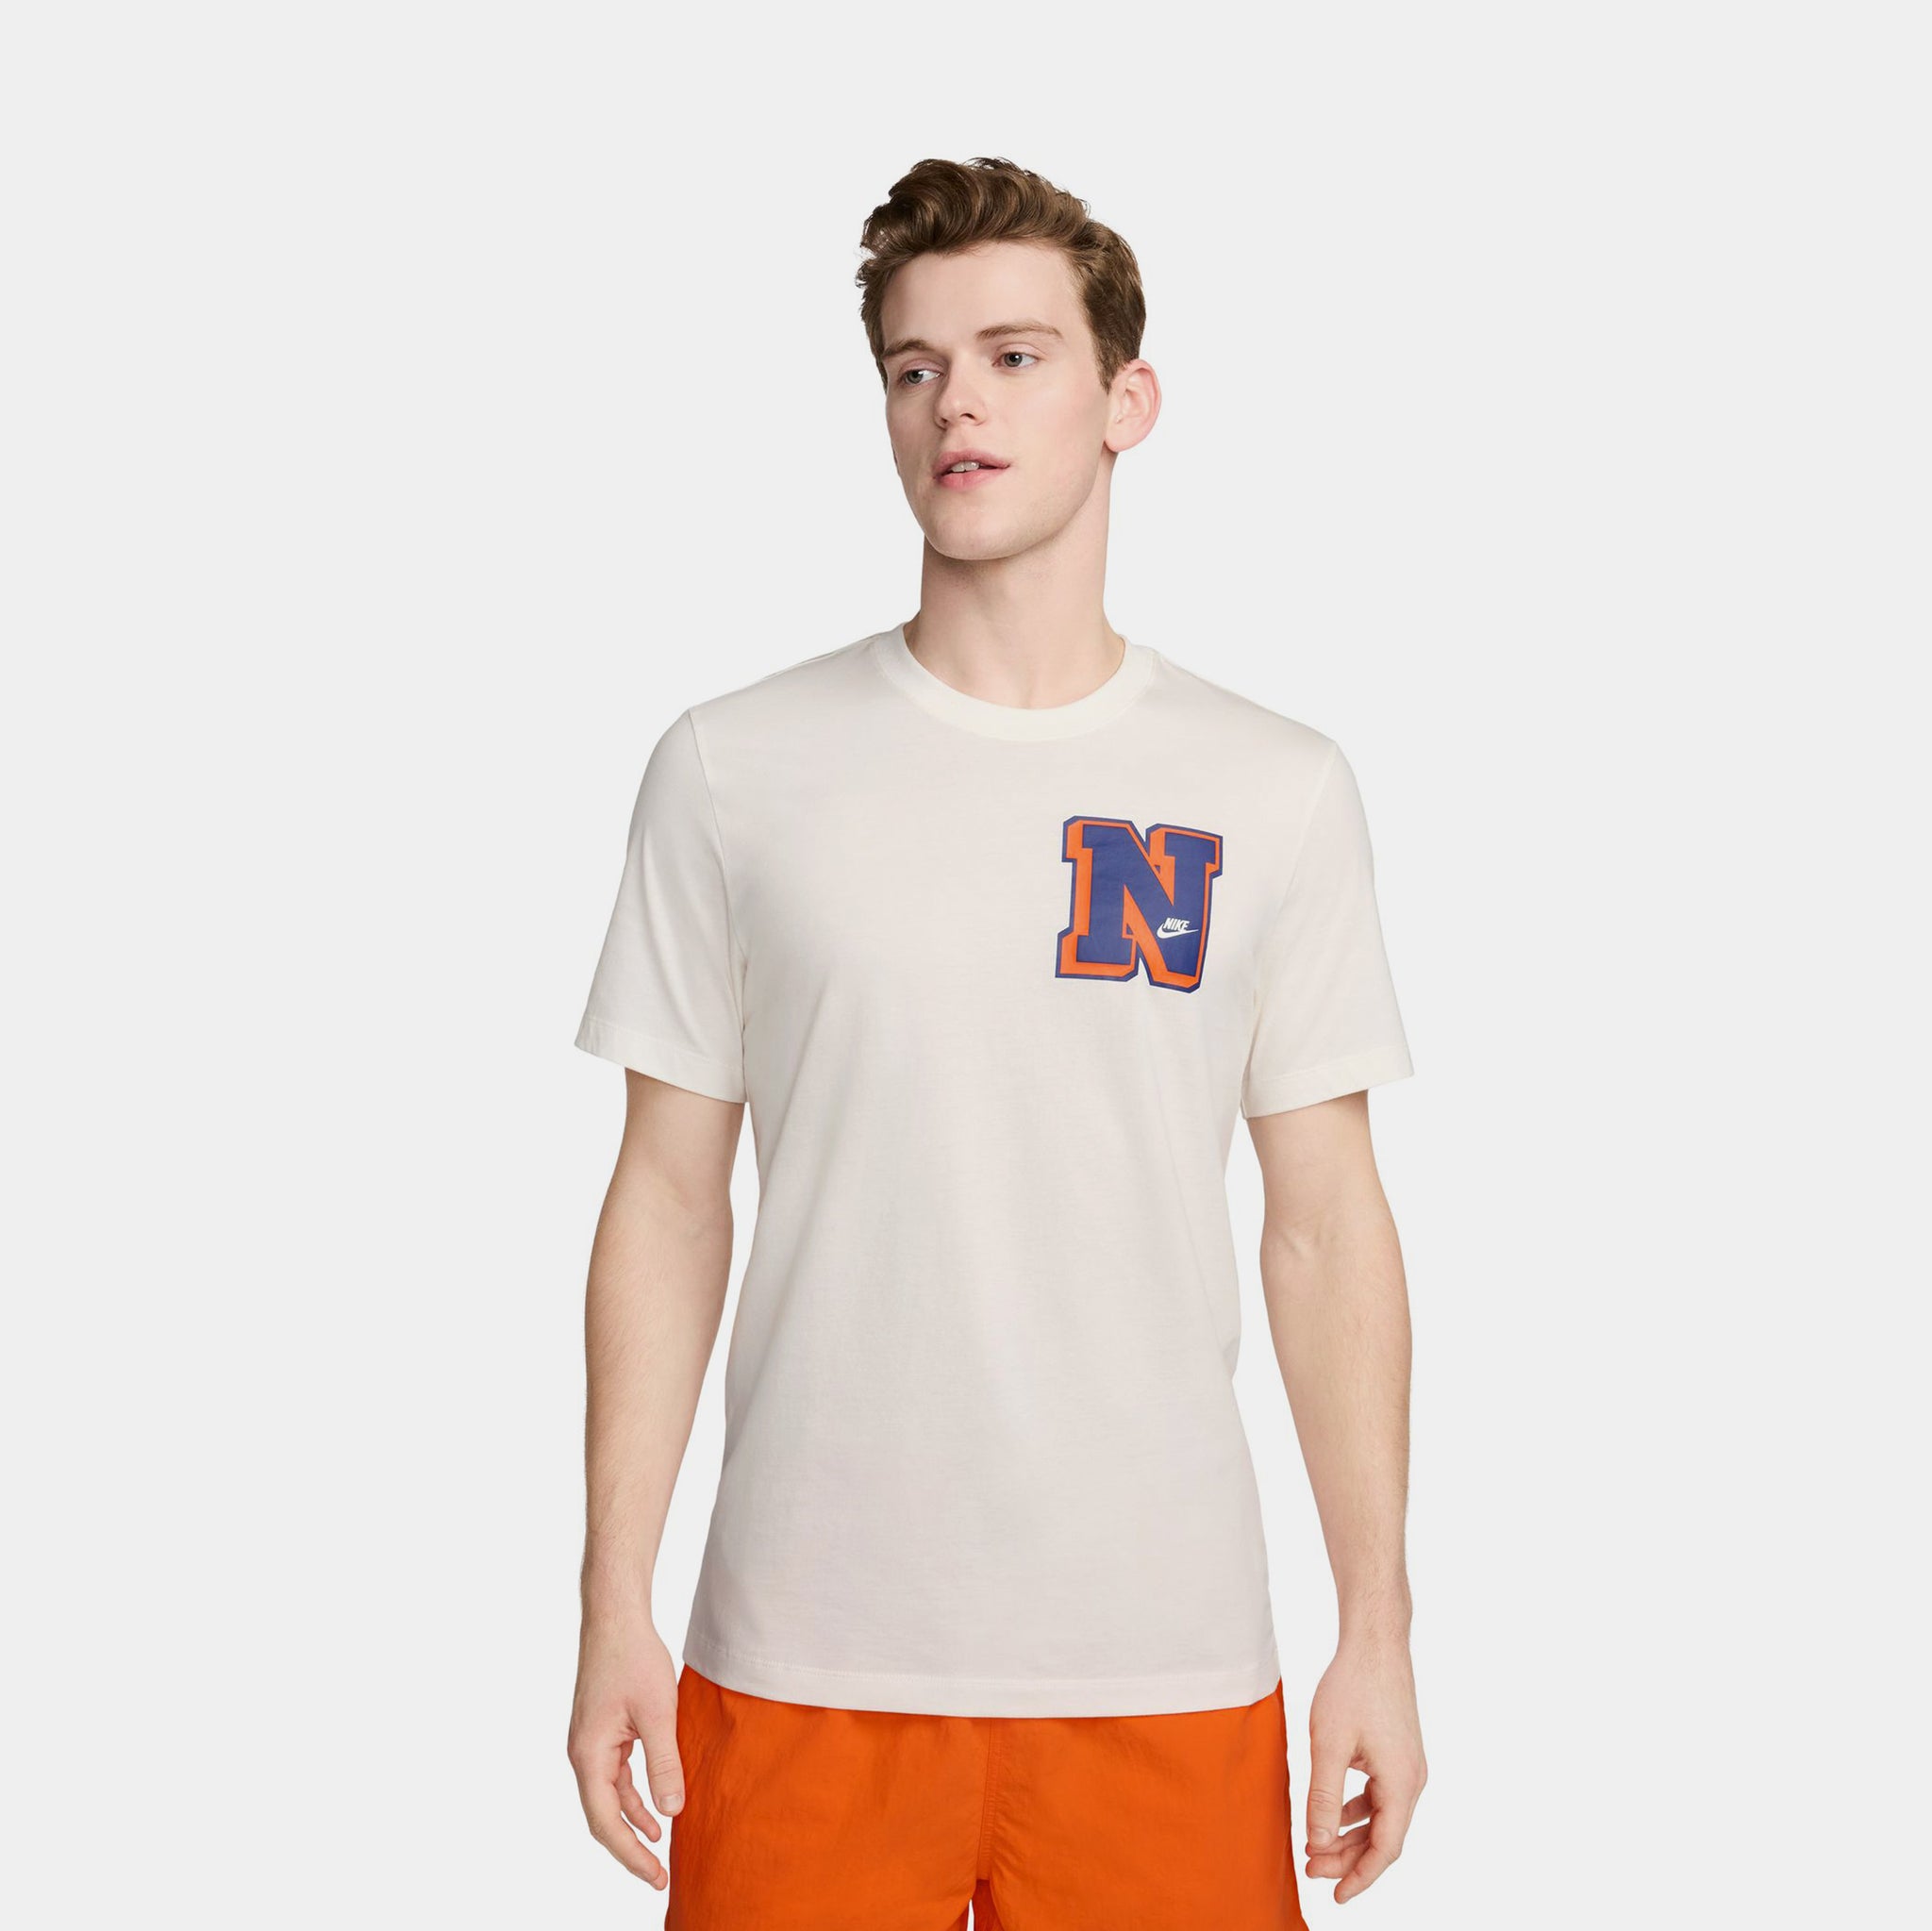 NSW 1972 Athletics Mens Short Sleeve Shirt (Beige/Orange)